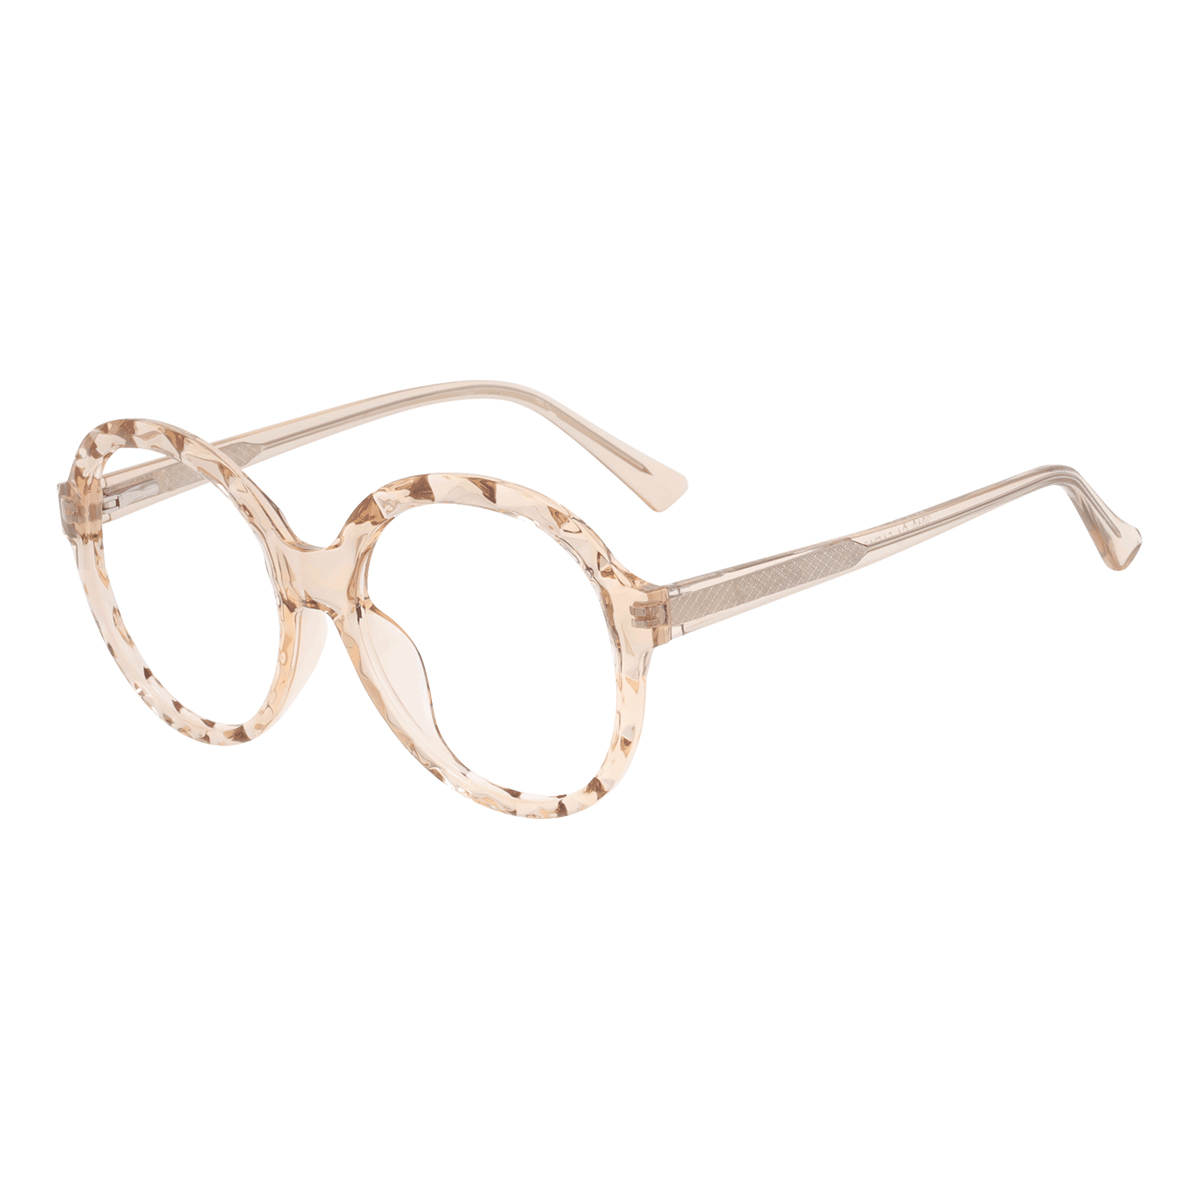 Euphrosyne - Round Transparent-Tawny Reading Glasses for Women